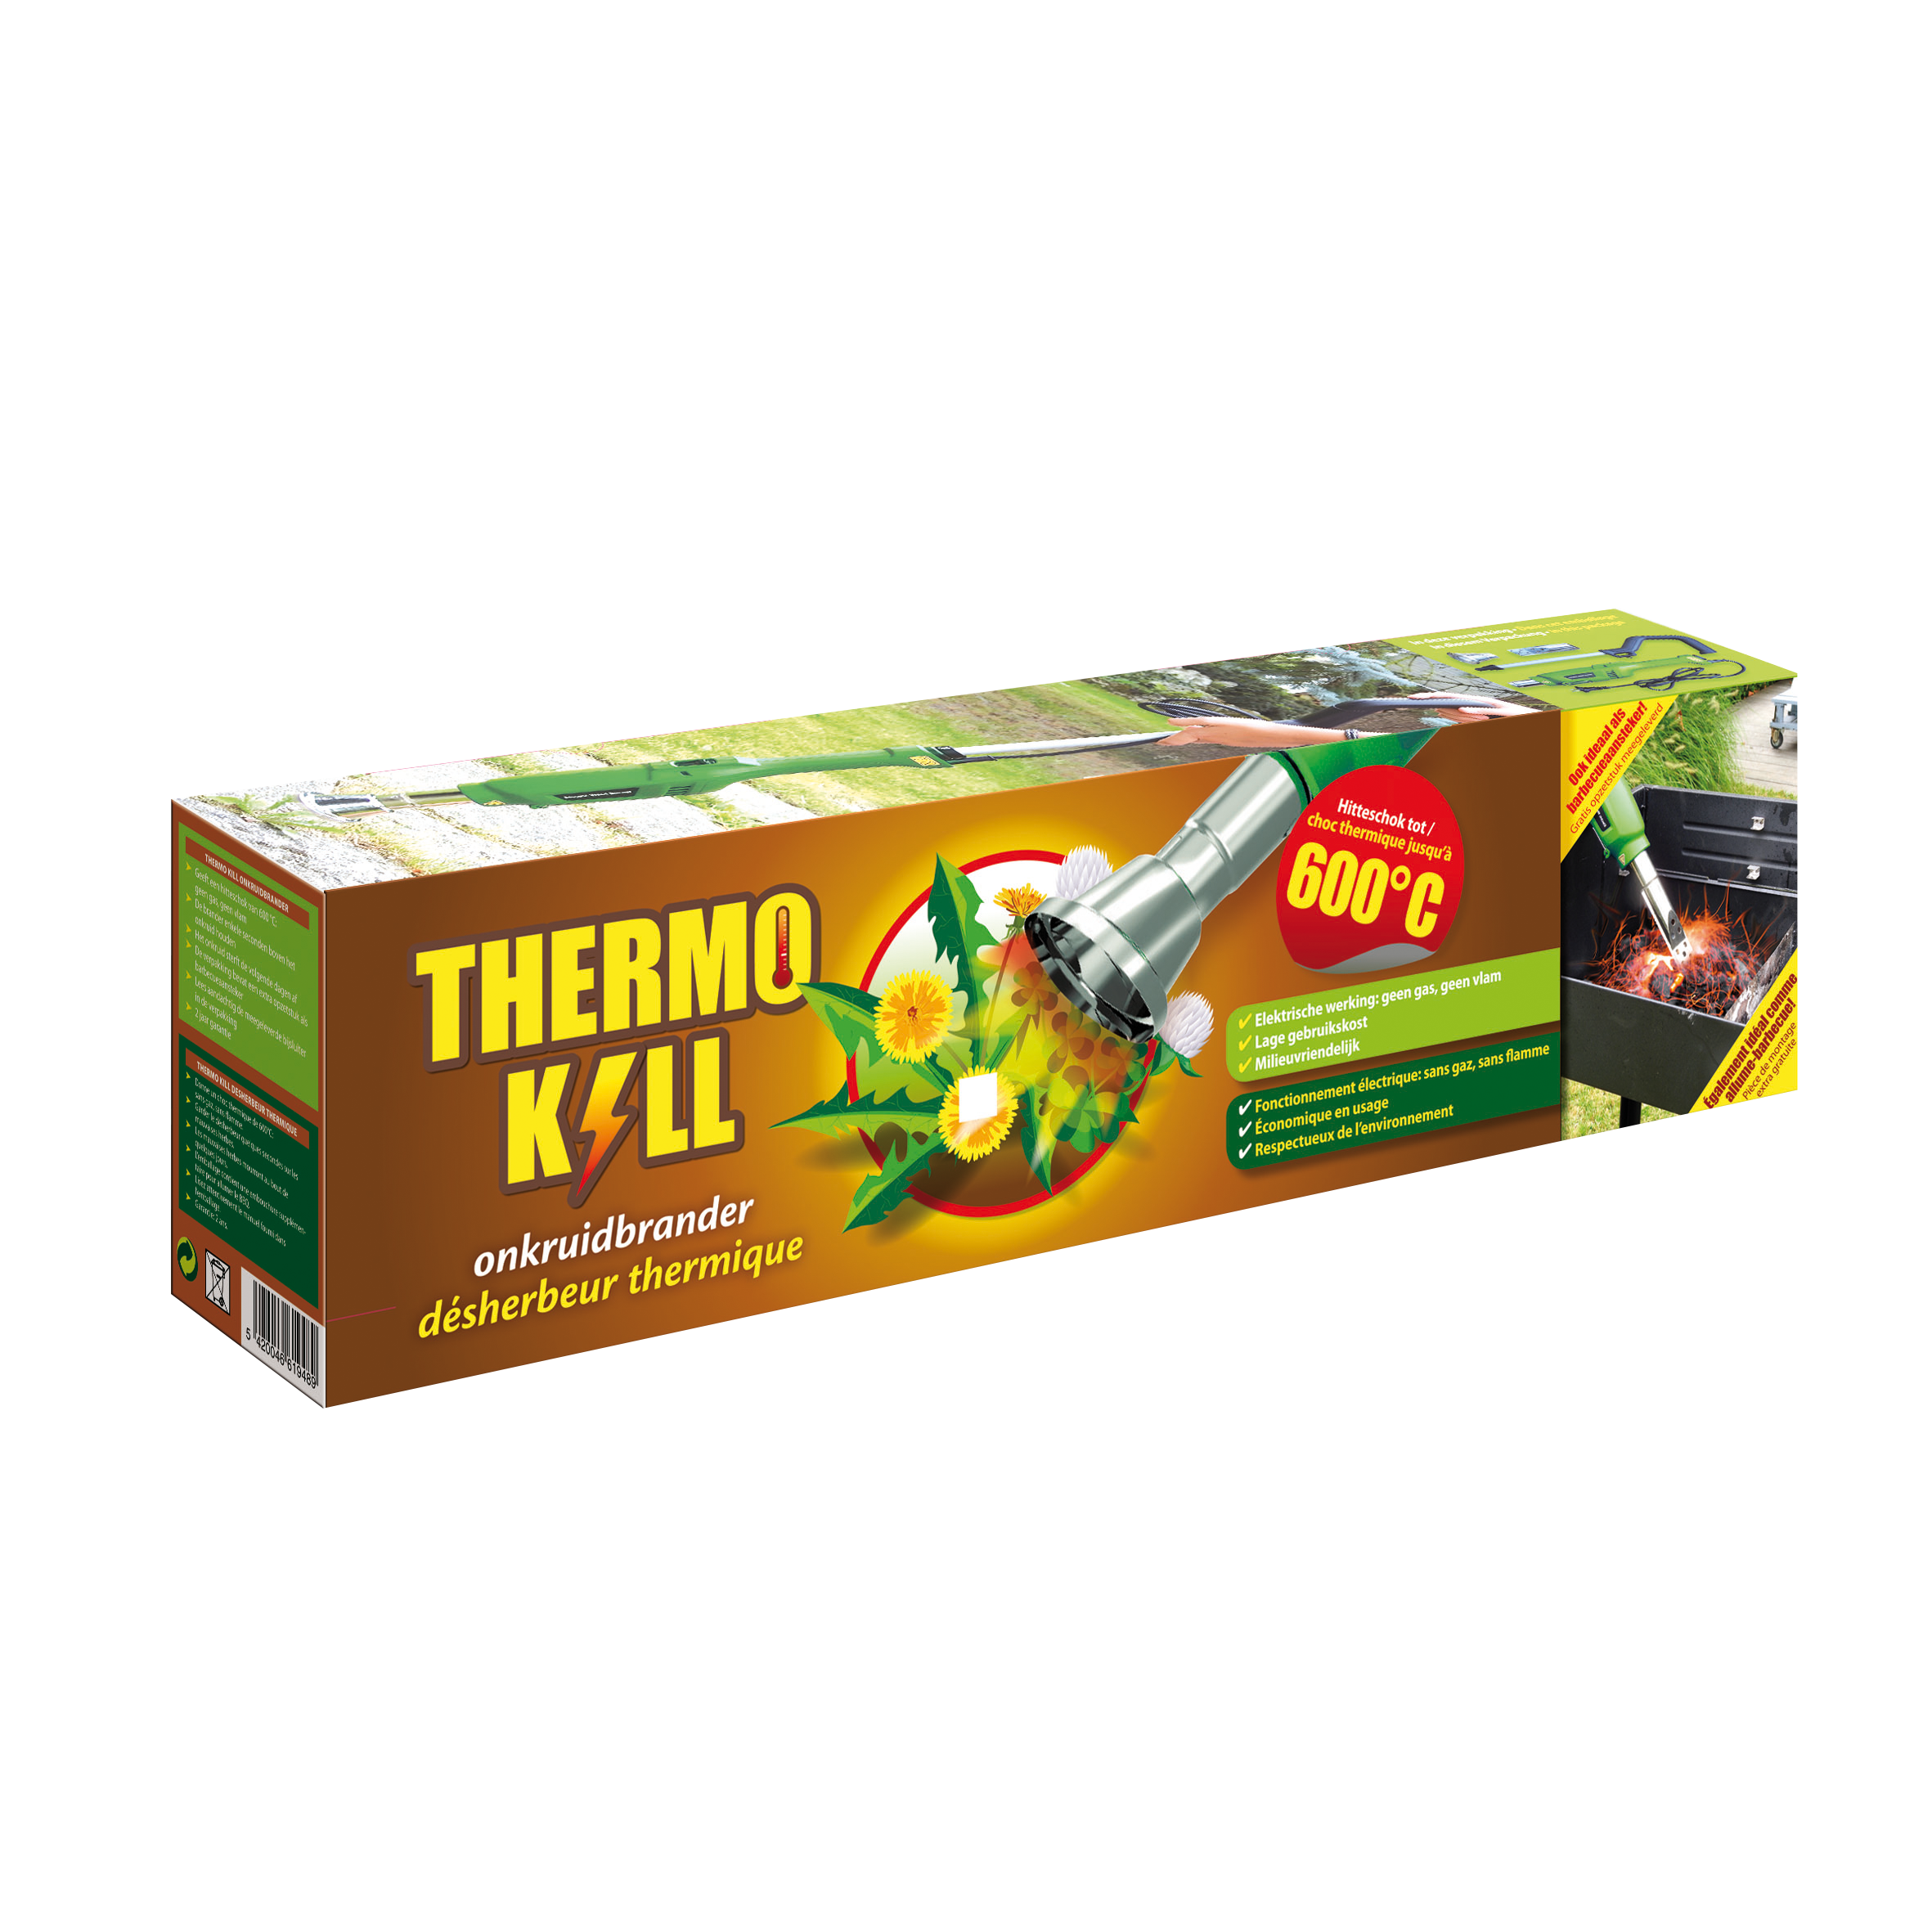 Thermo Kill Onkruidbrander image